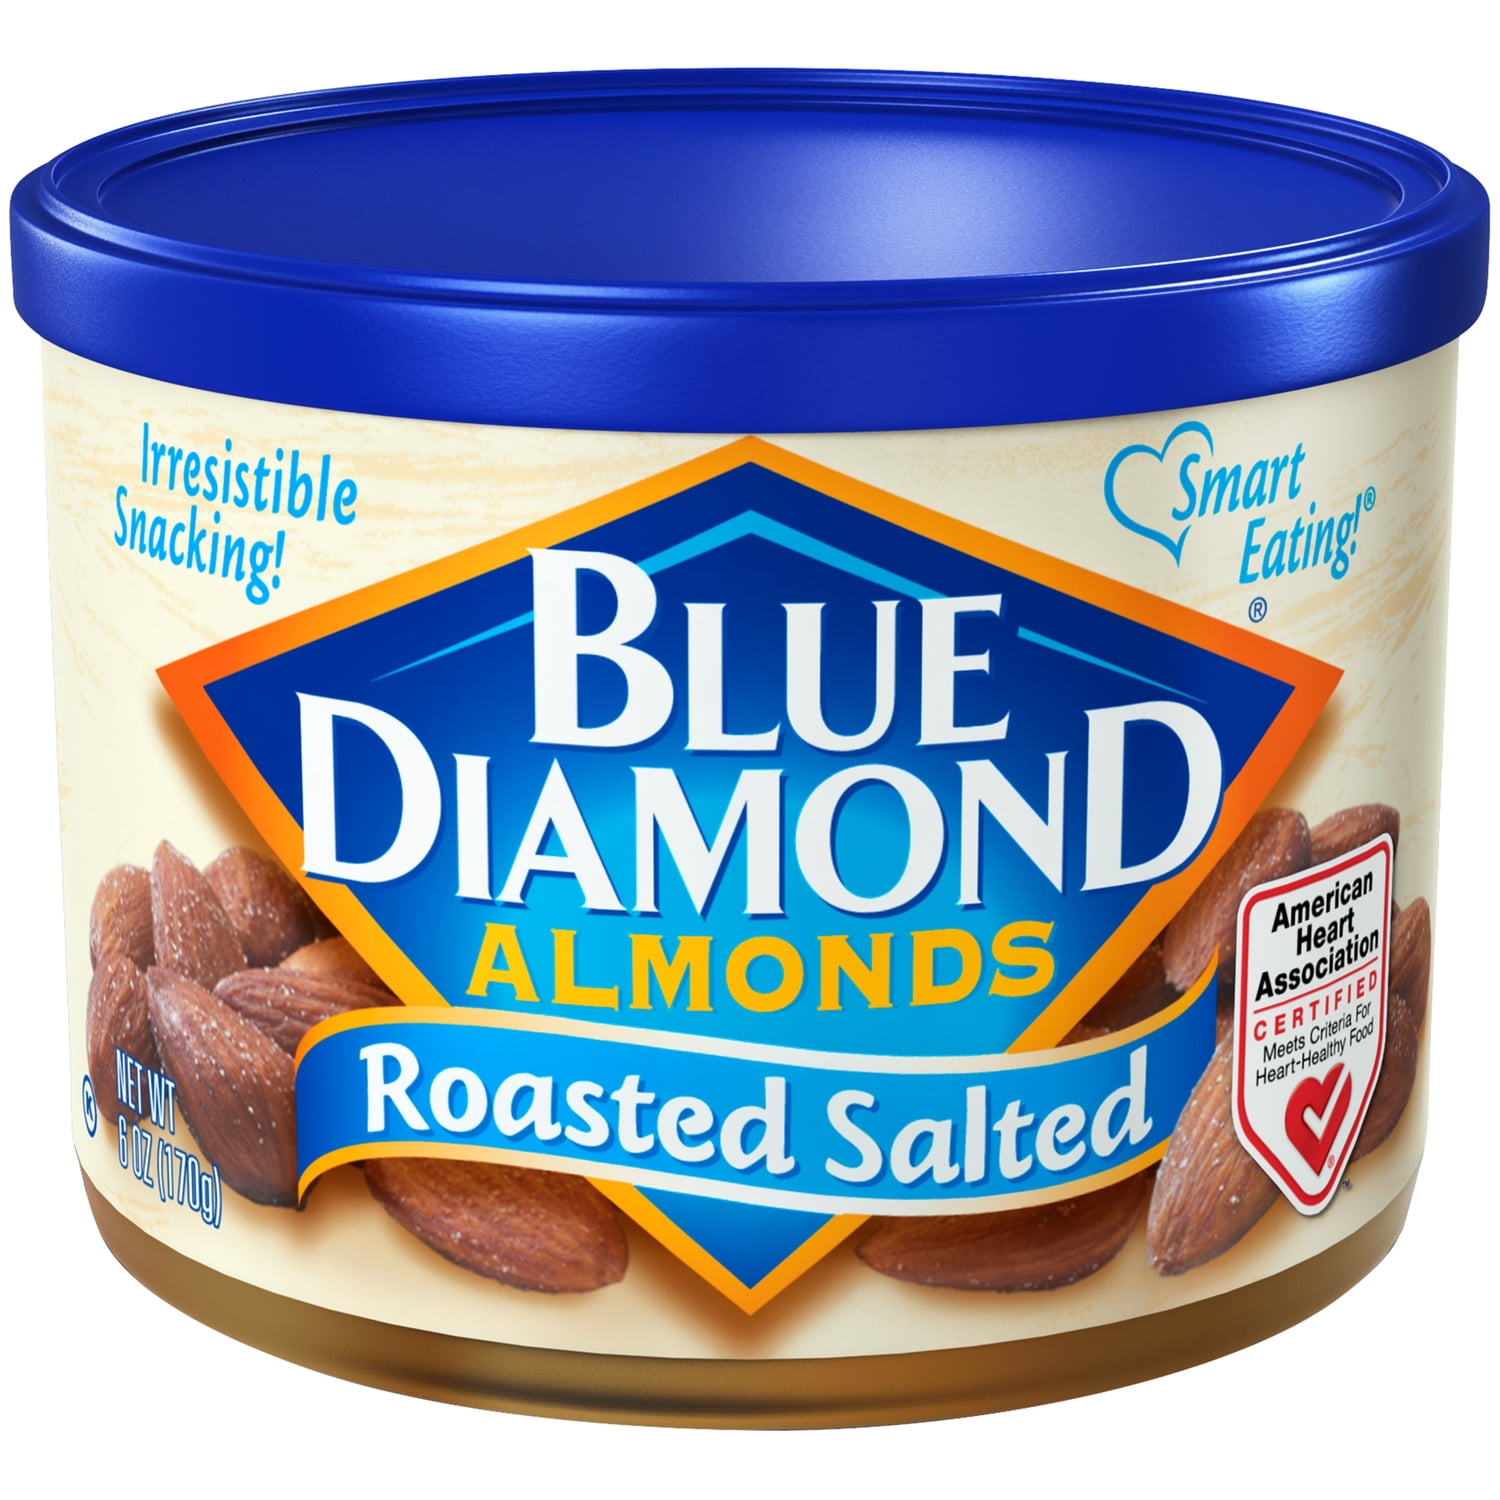 blue-diamond-almonds-roasted-salted-canister-6-oz-walmart